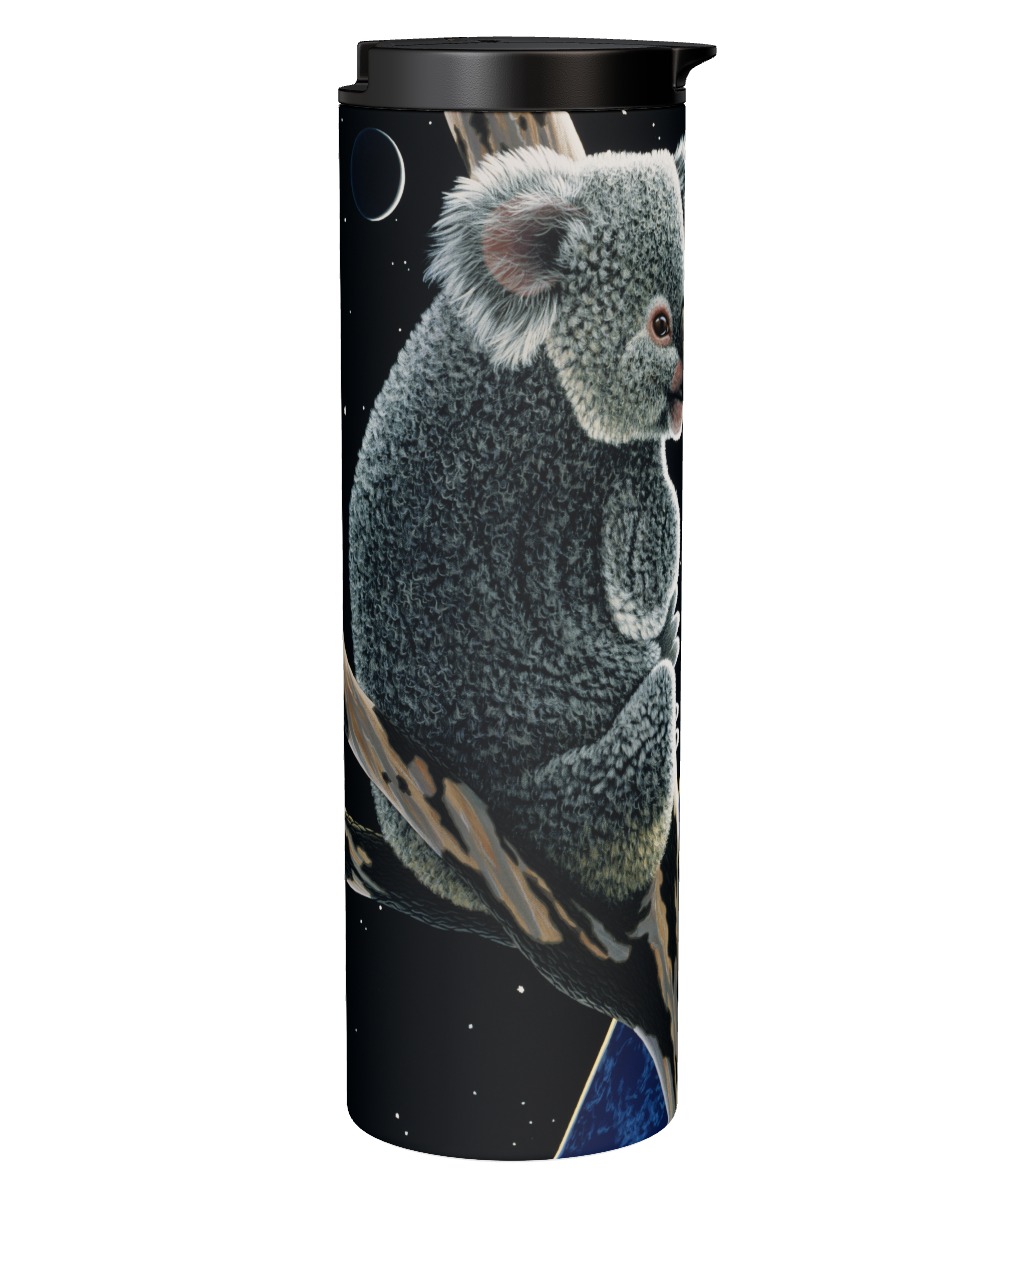 New Day Dawning - Koala Tumbler